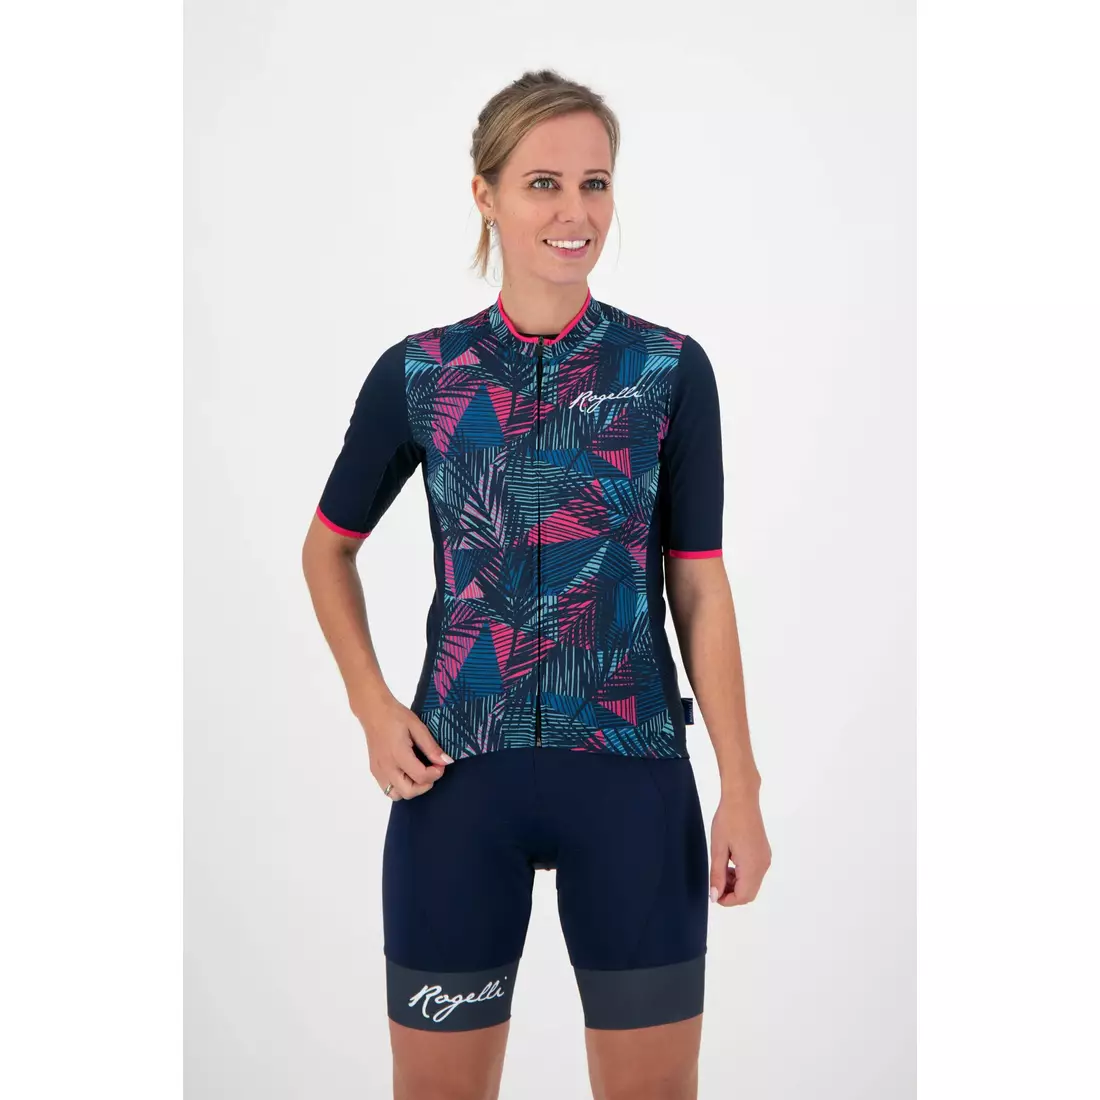 ROGELLI tricou de ciclism feminin LEAF blue 010.085